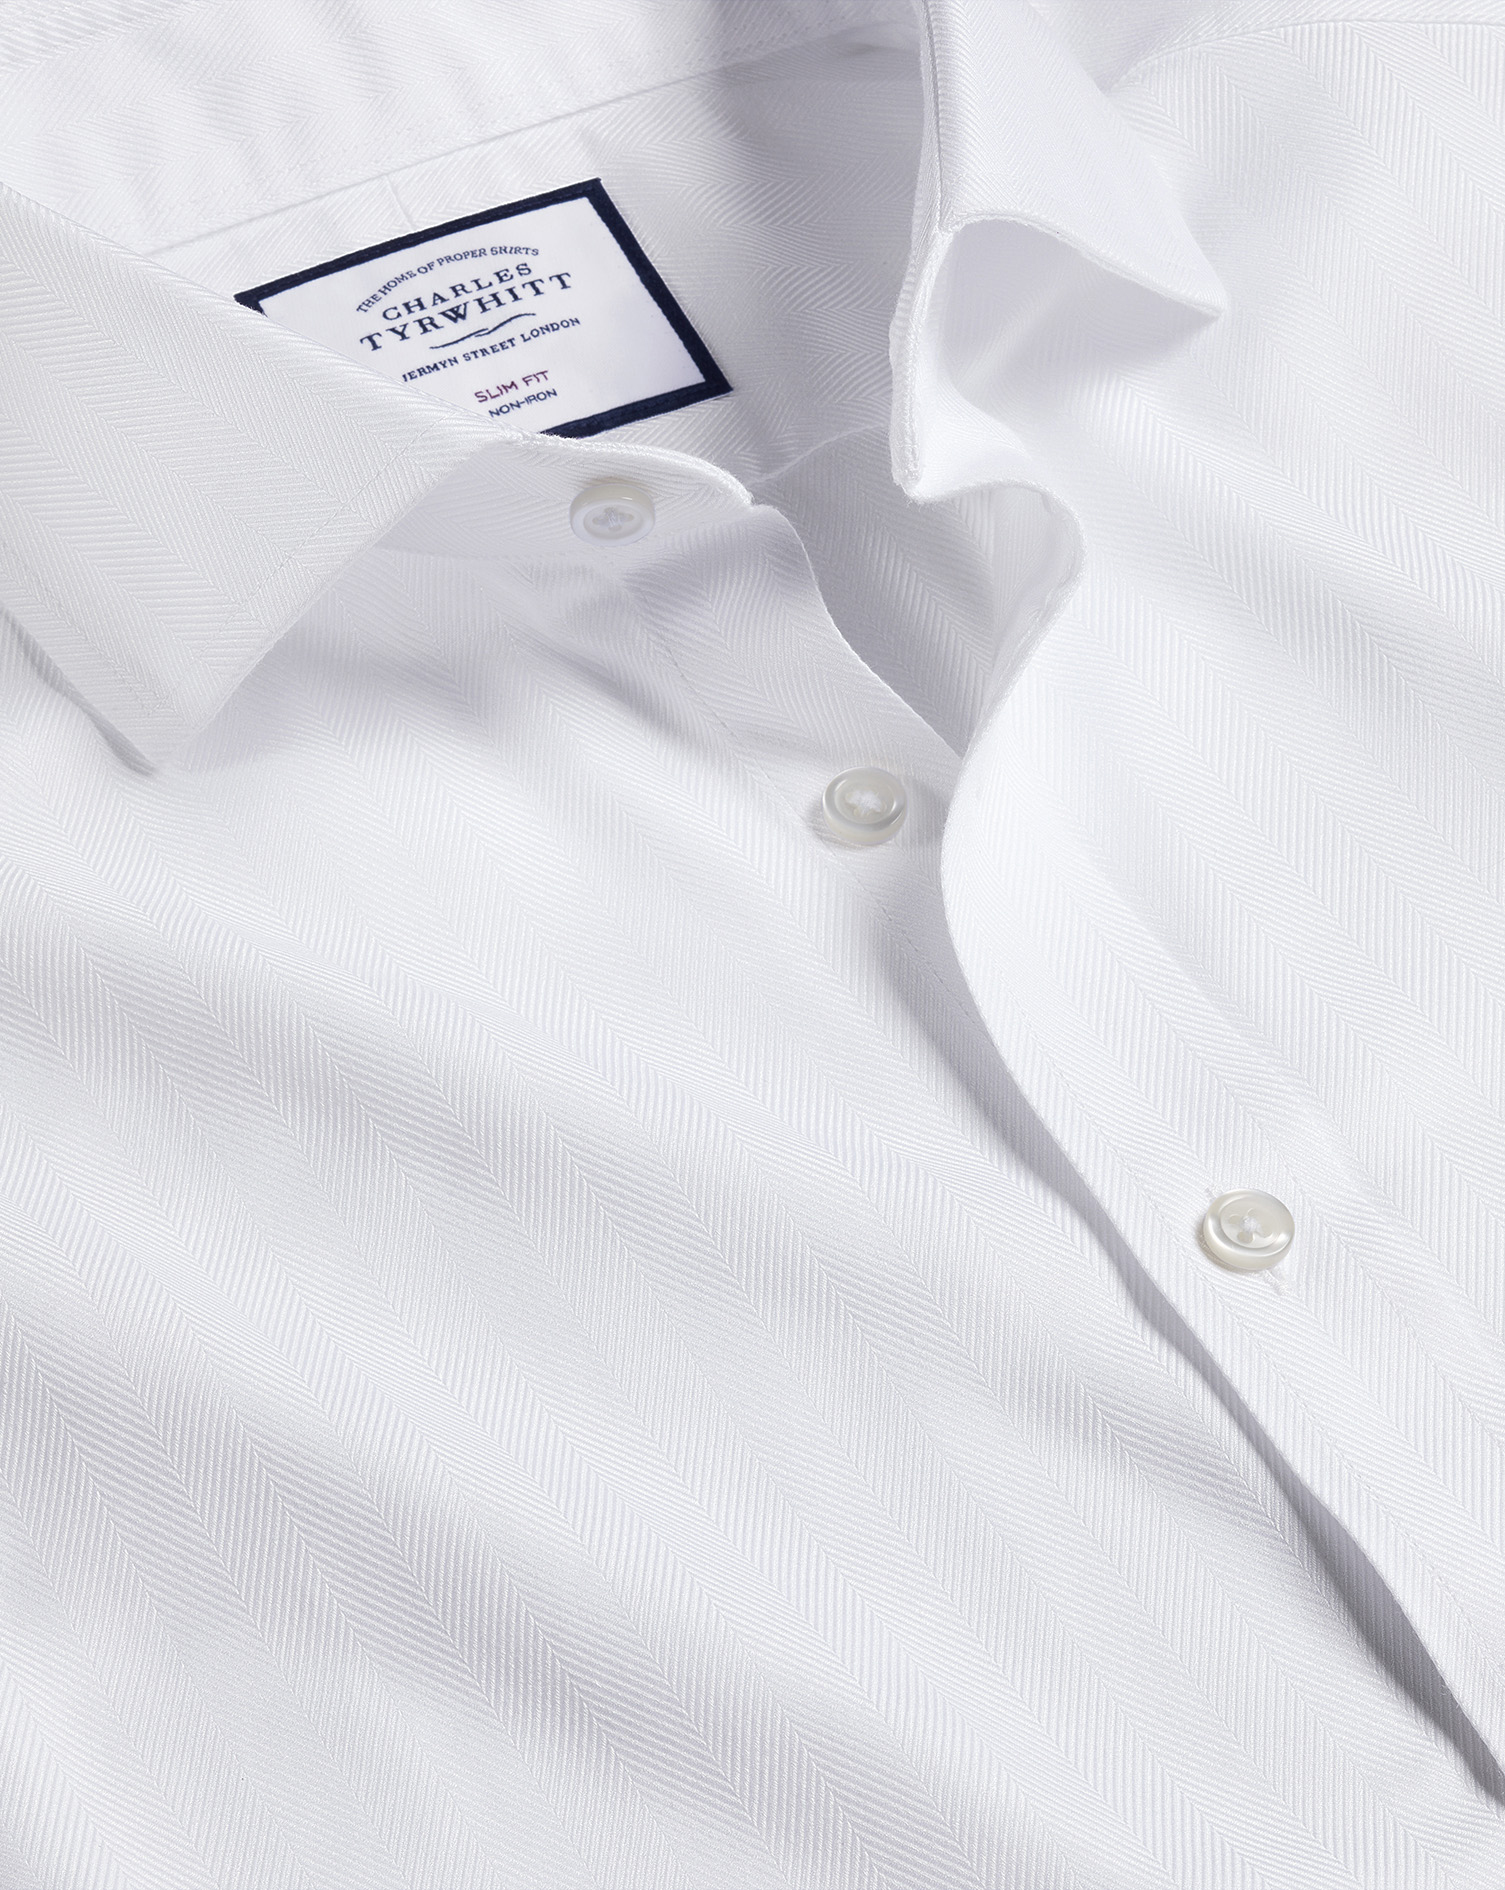 Men's Charles Tyrwhitt Cutaway Collar Non-Iron Herringbone Dress Shirt - White Single Cuff Size XL C